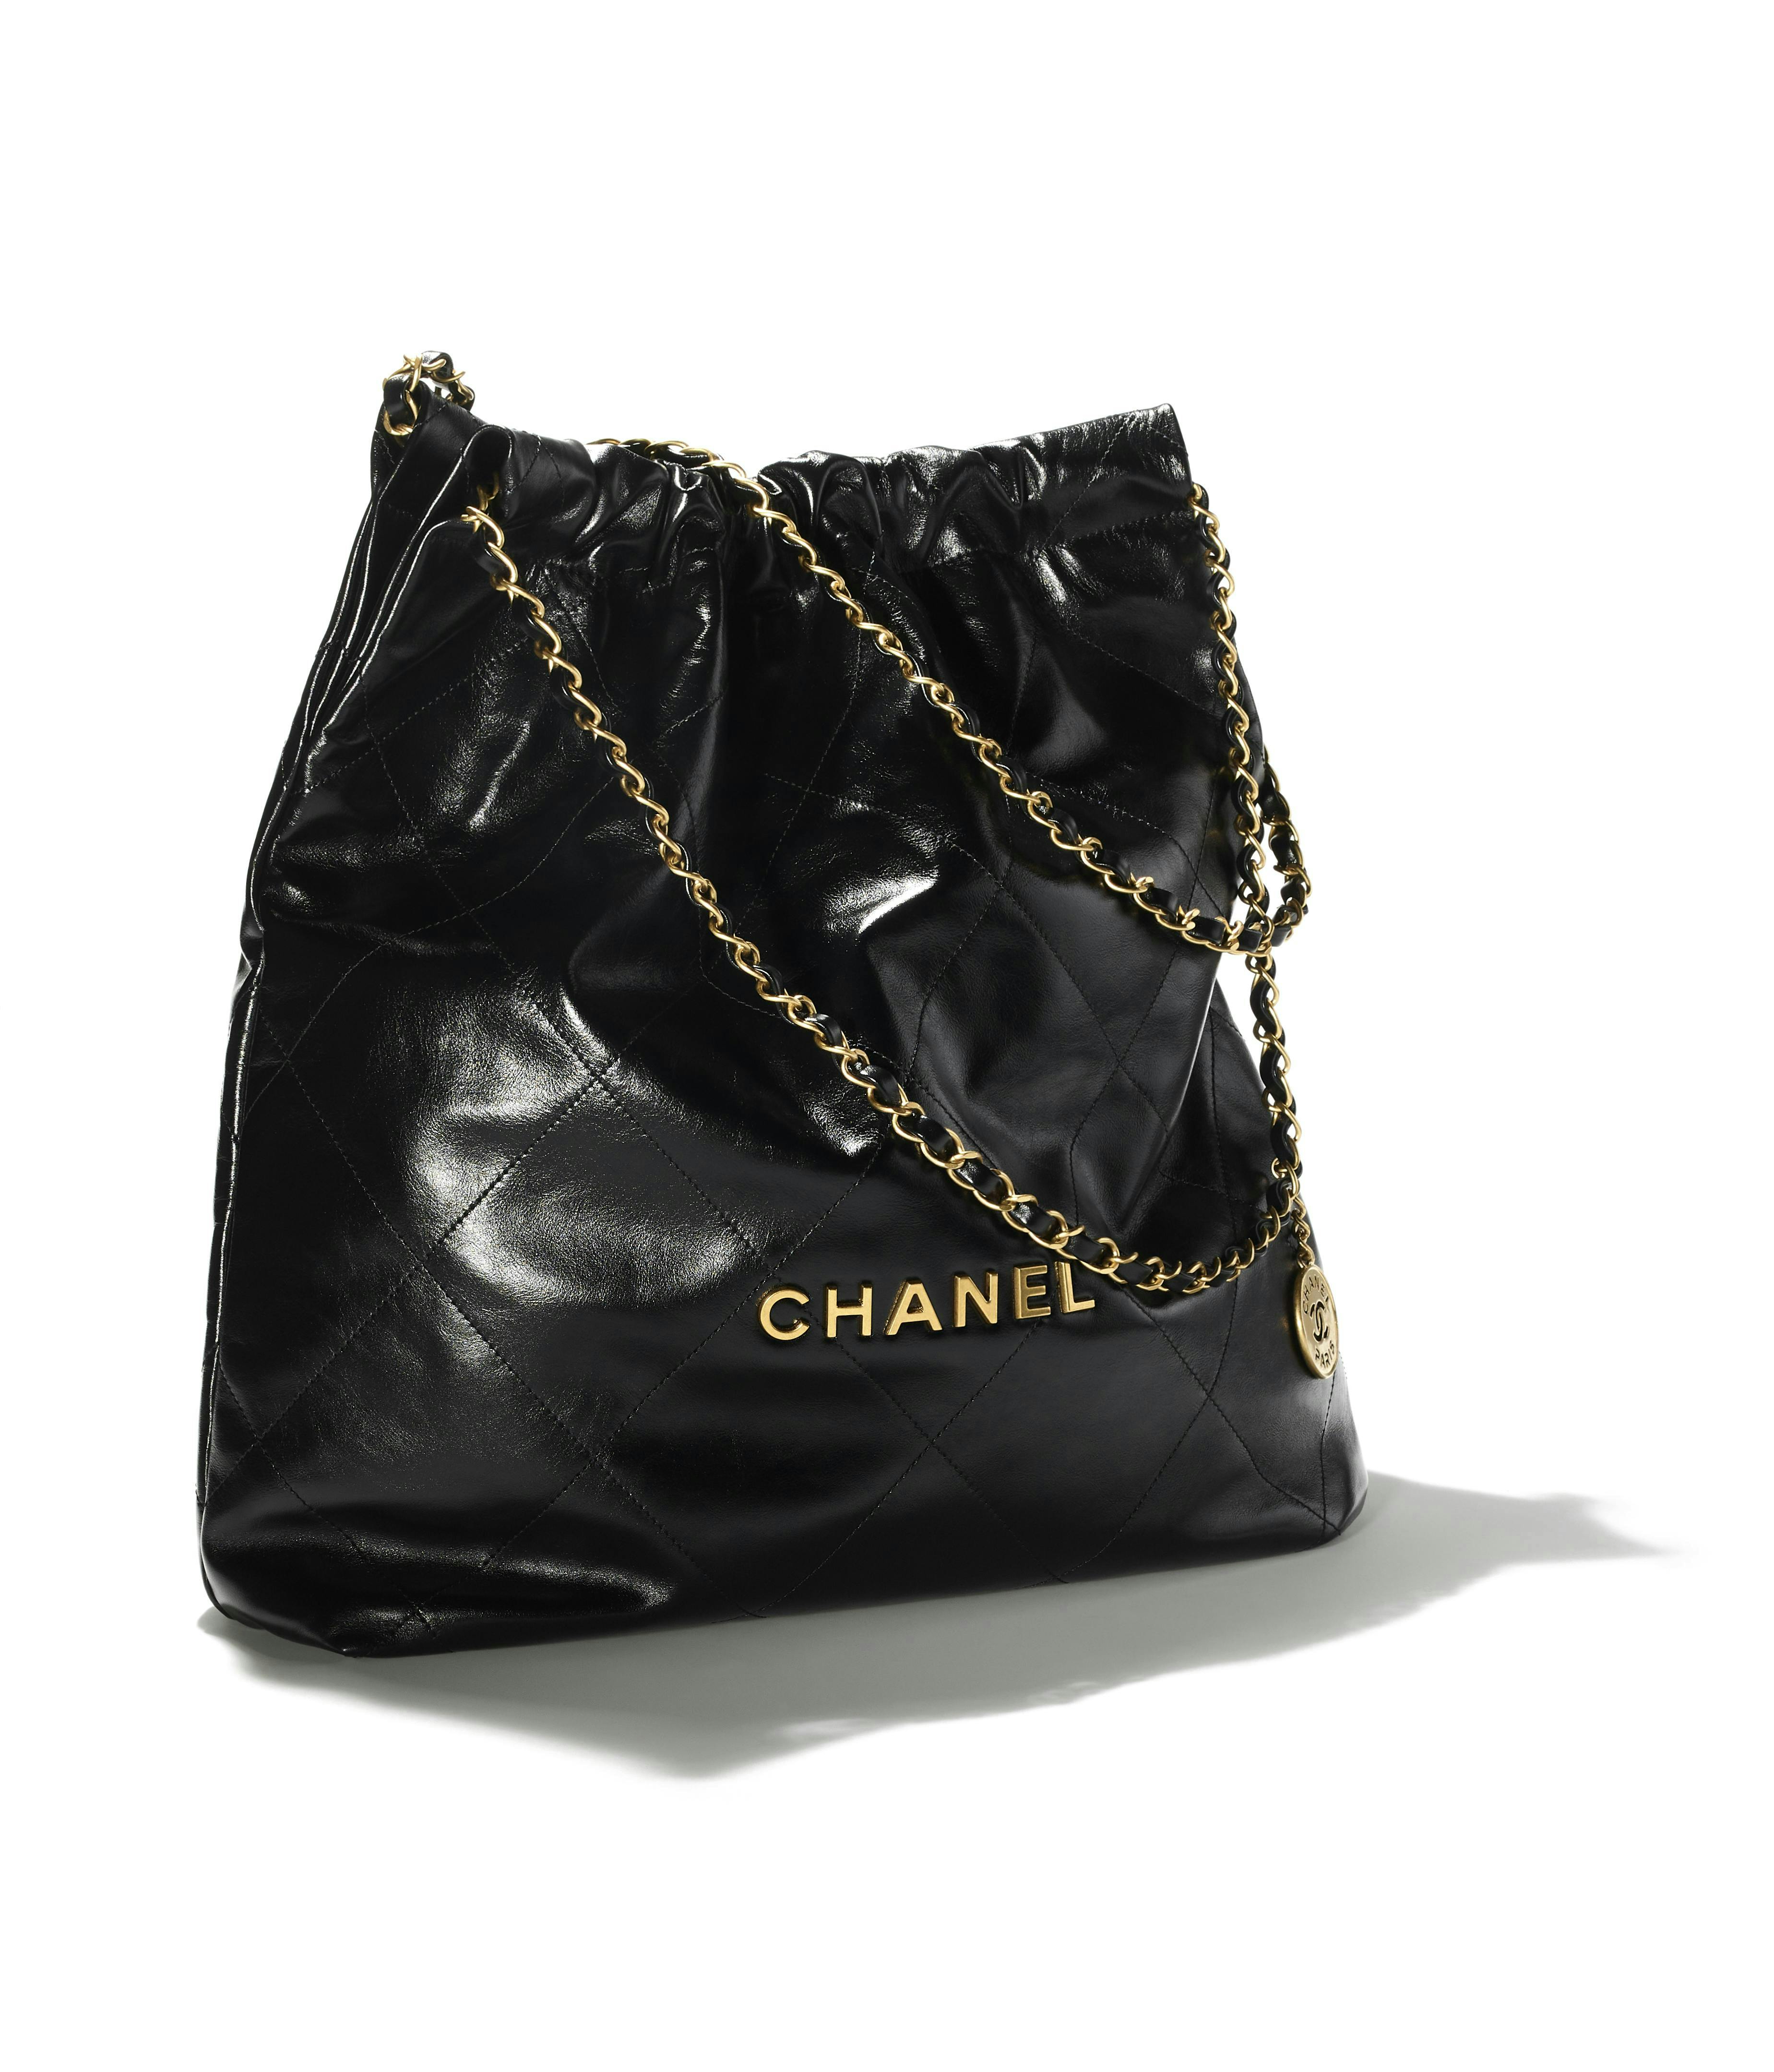 CHANEL 22 Handbags - Bellisa